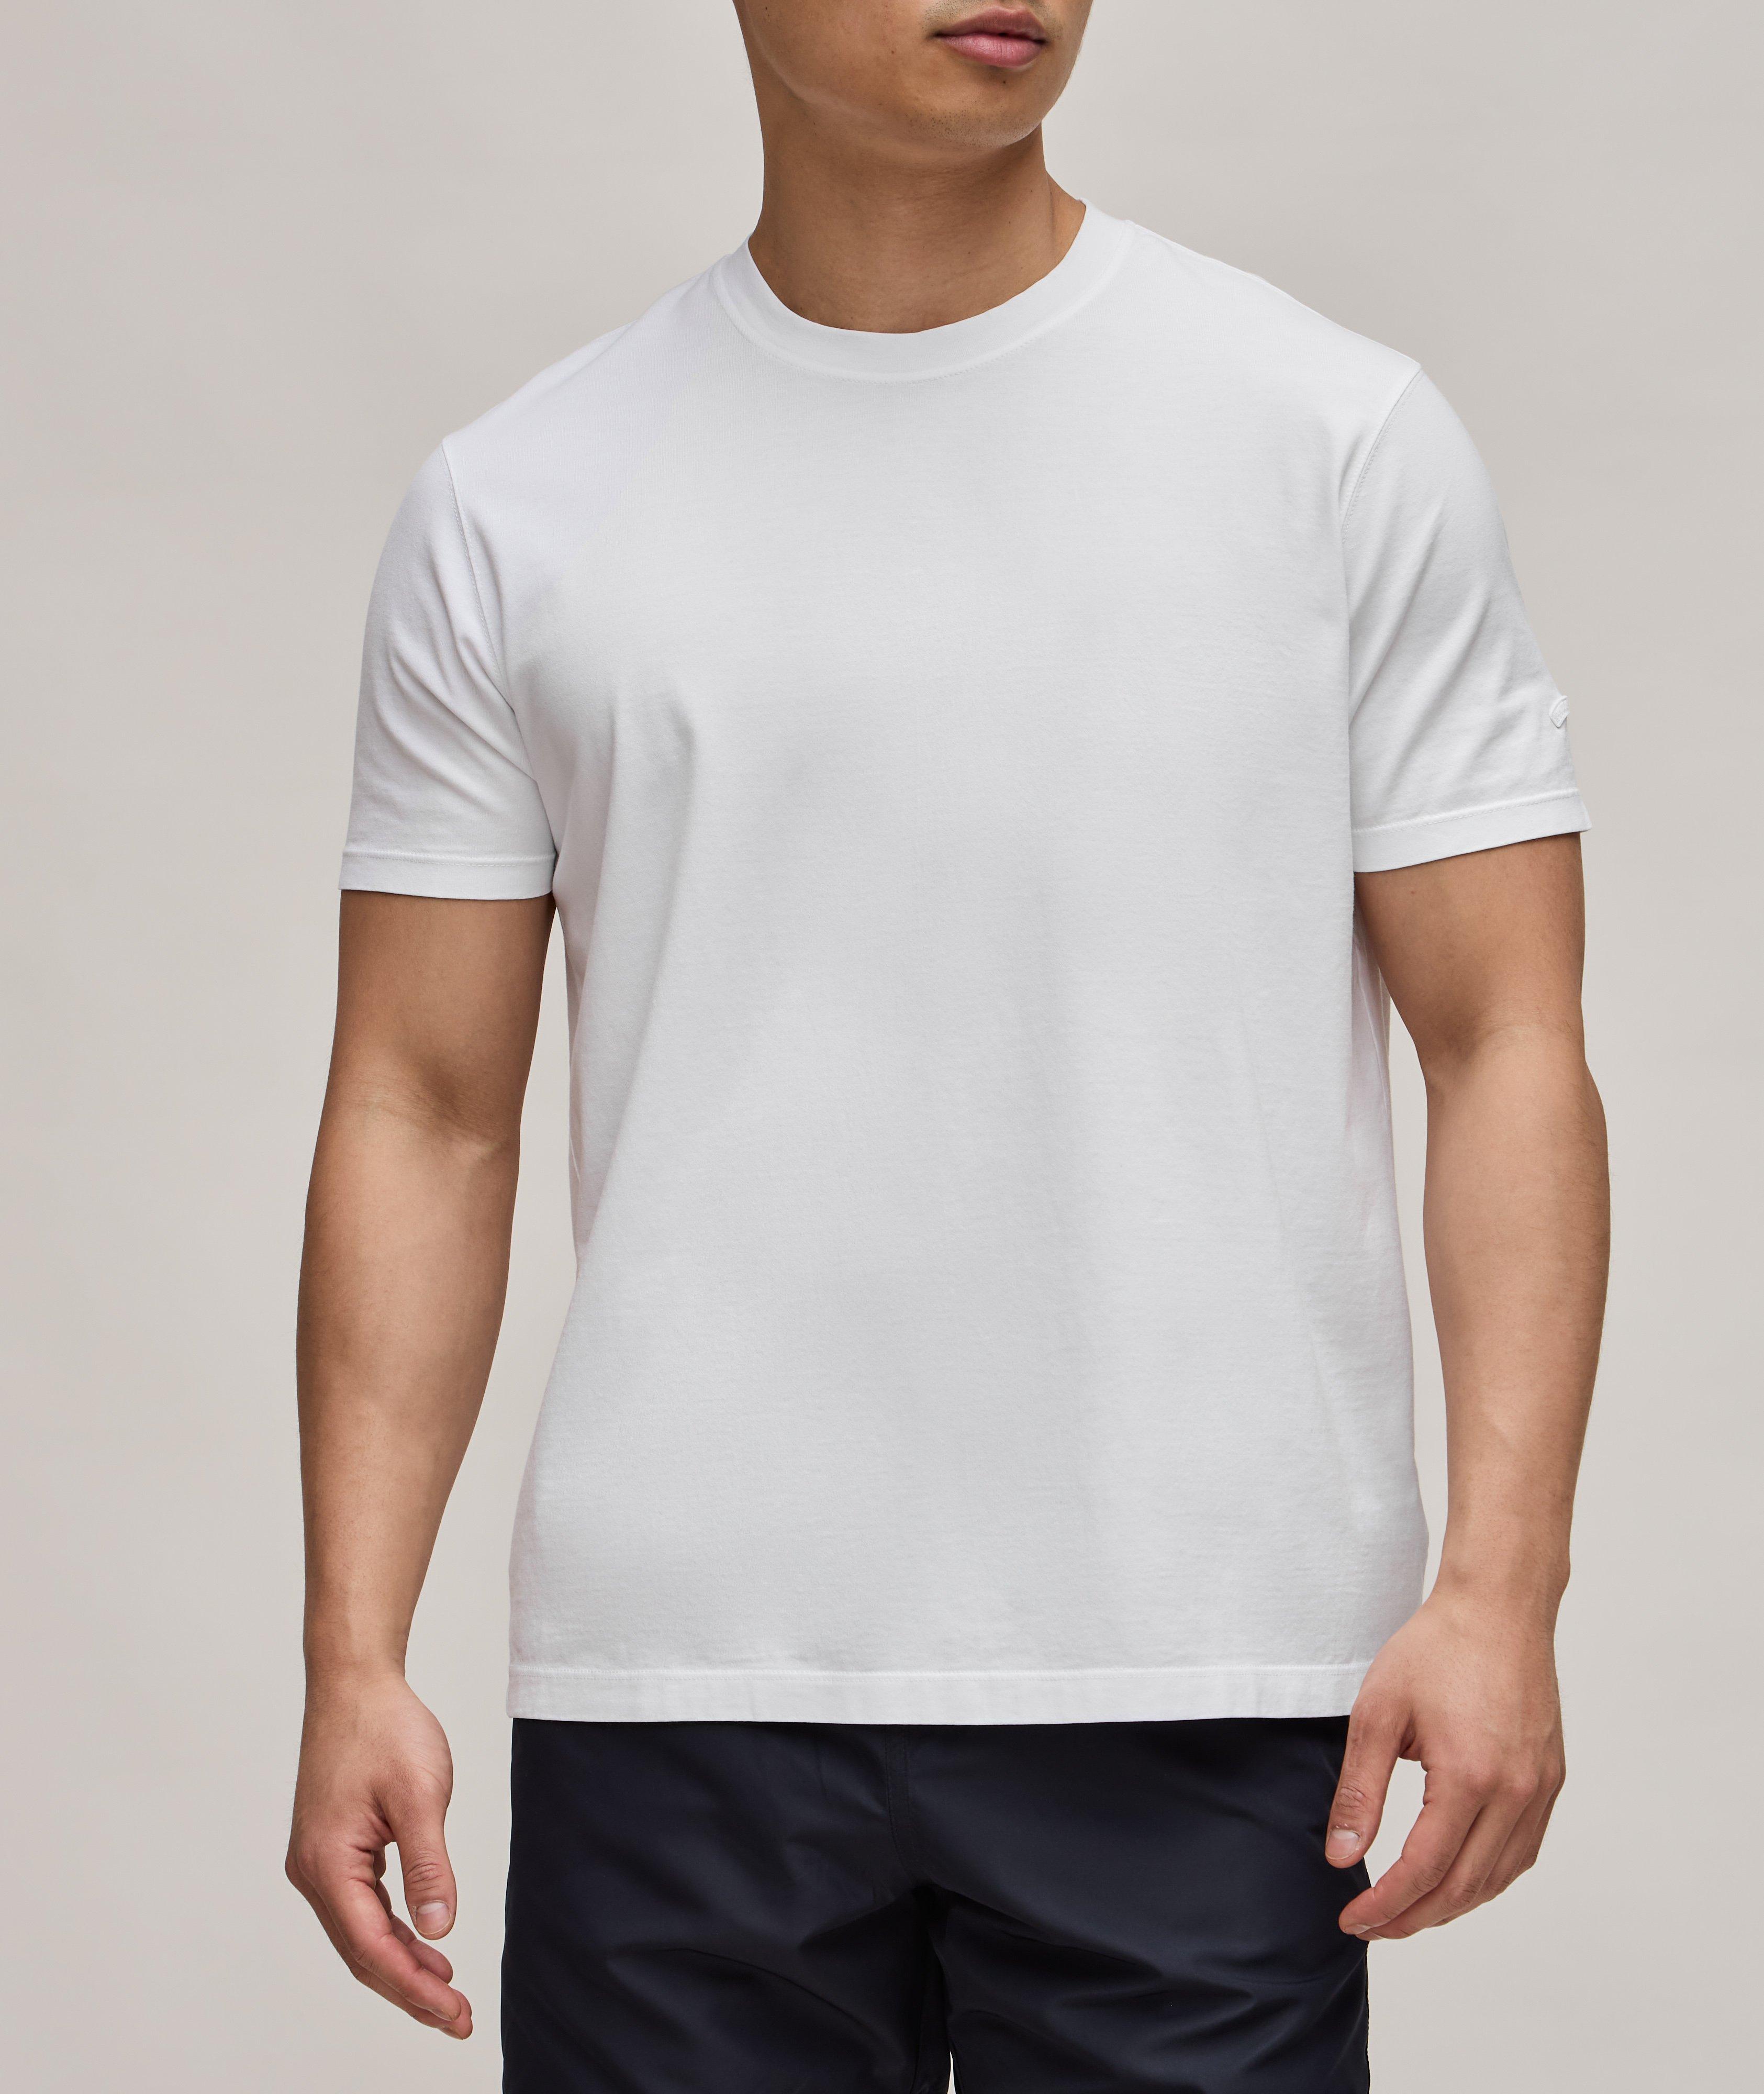 Garment Dyed Cotton T-Shirt image 1